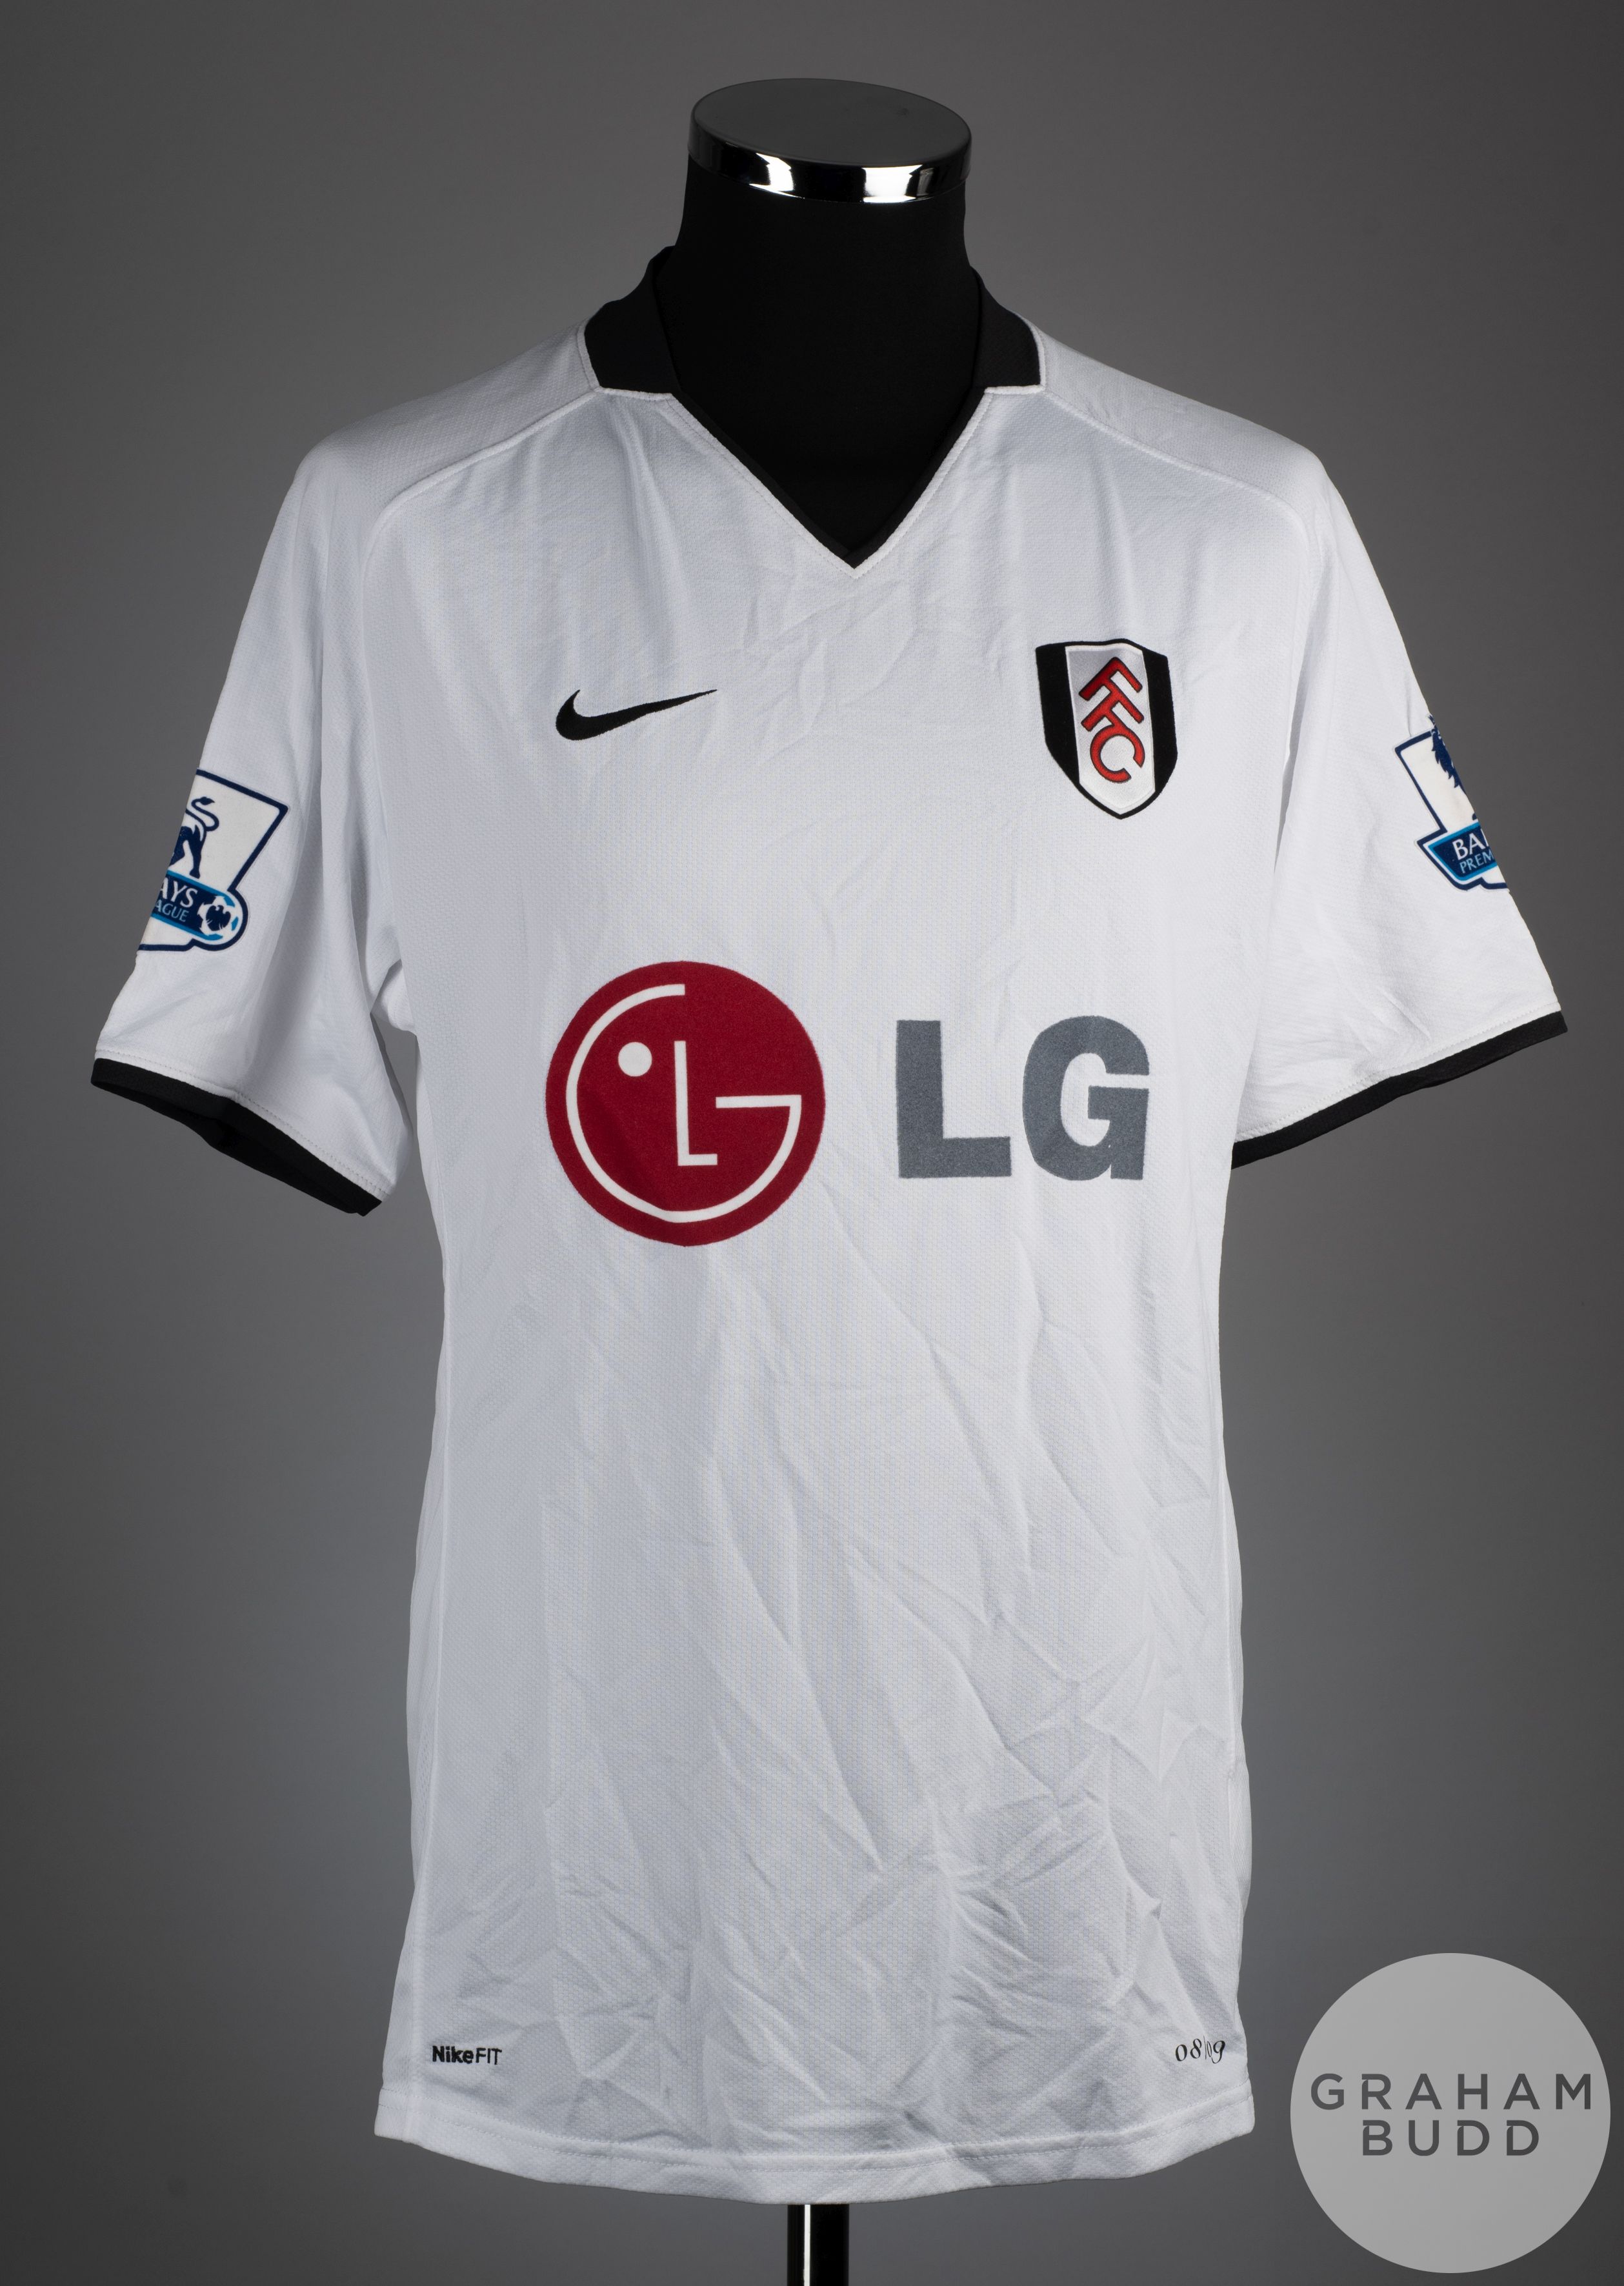 Andrew Johnson white No.8 Fulham short sleeve shirt, 2008-09